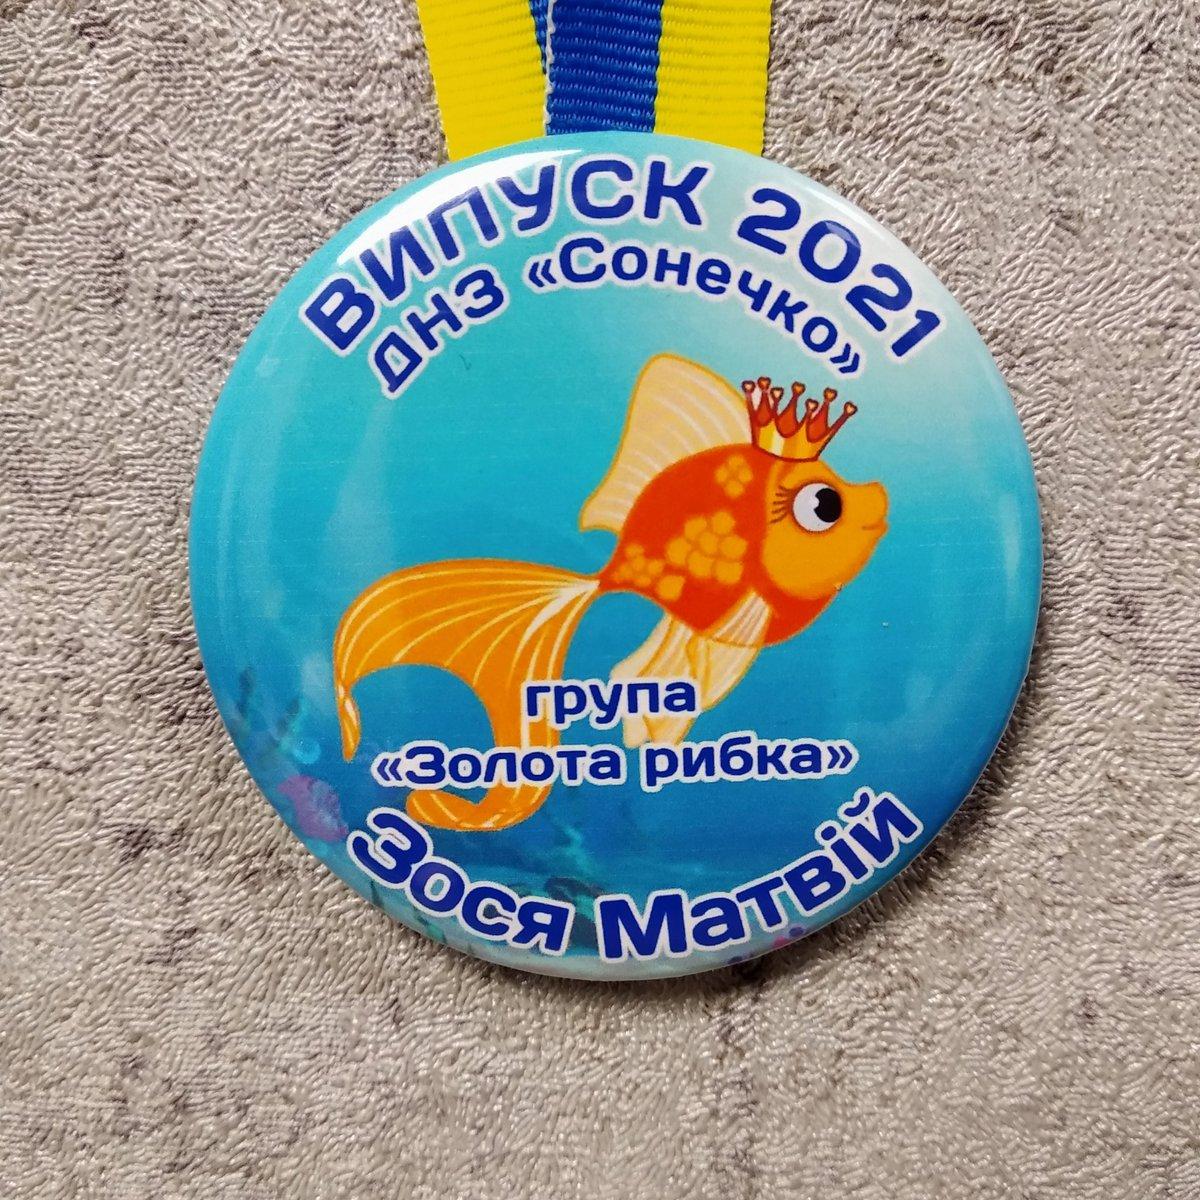 Іменна медаль Випускник д/с група "Золота рибка", фото 1